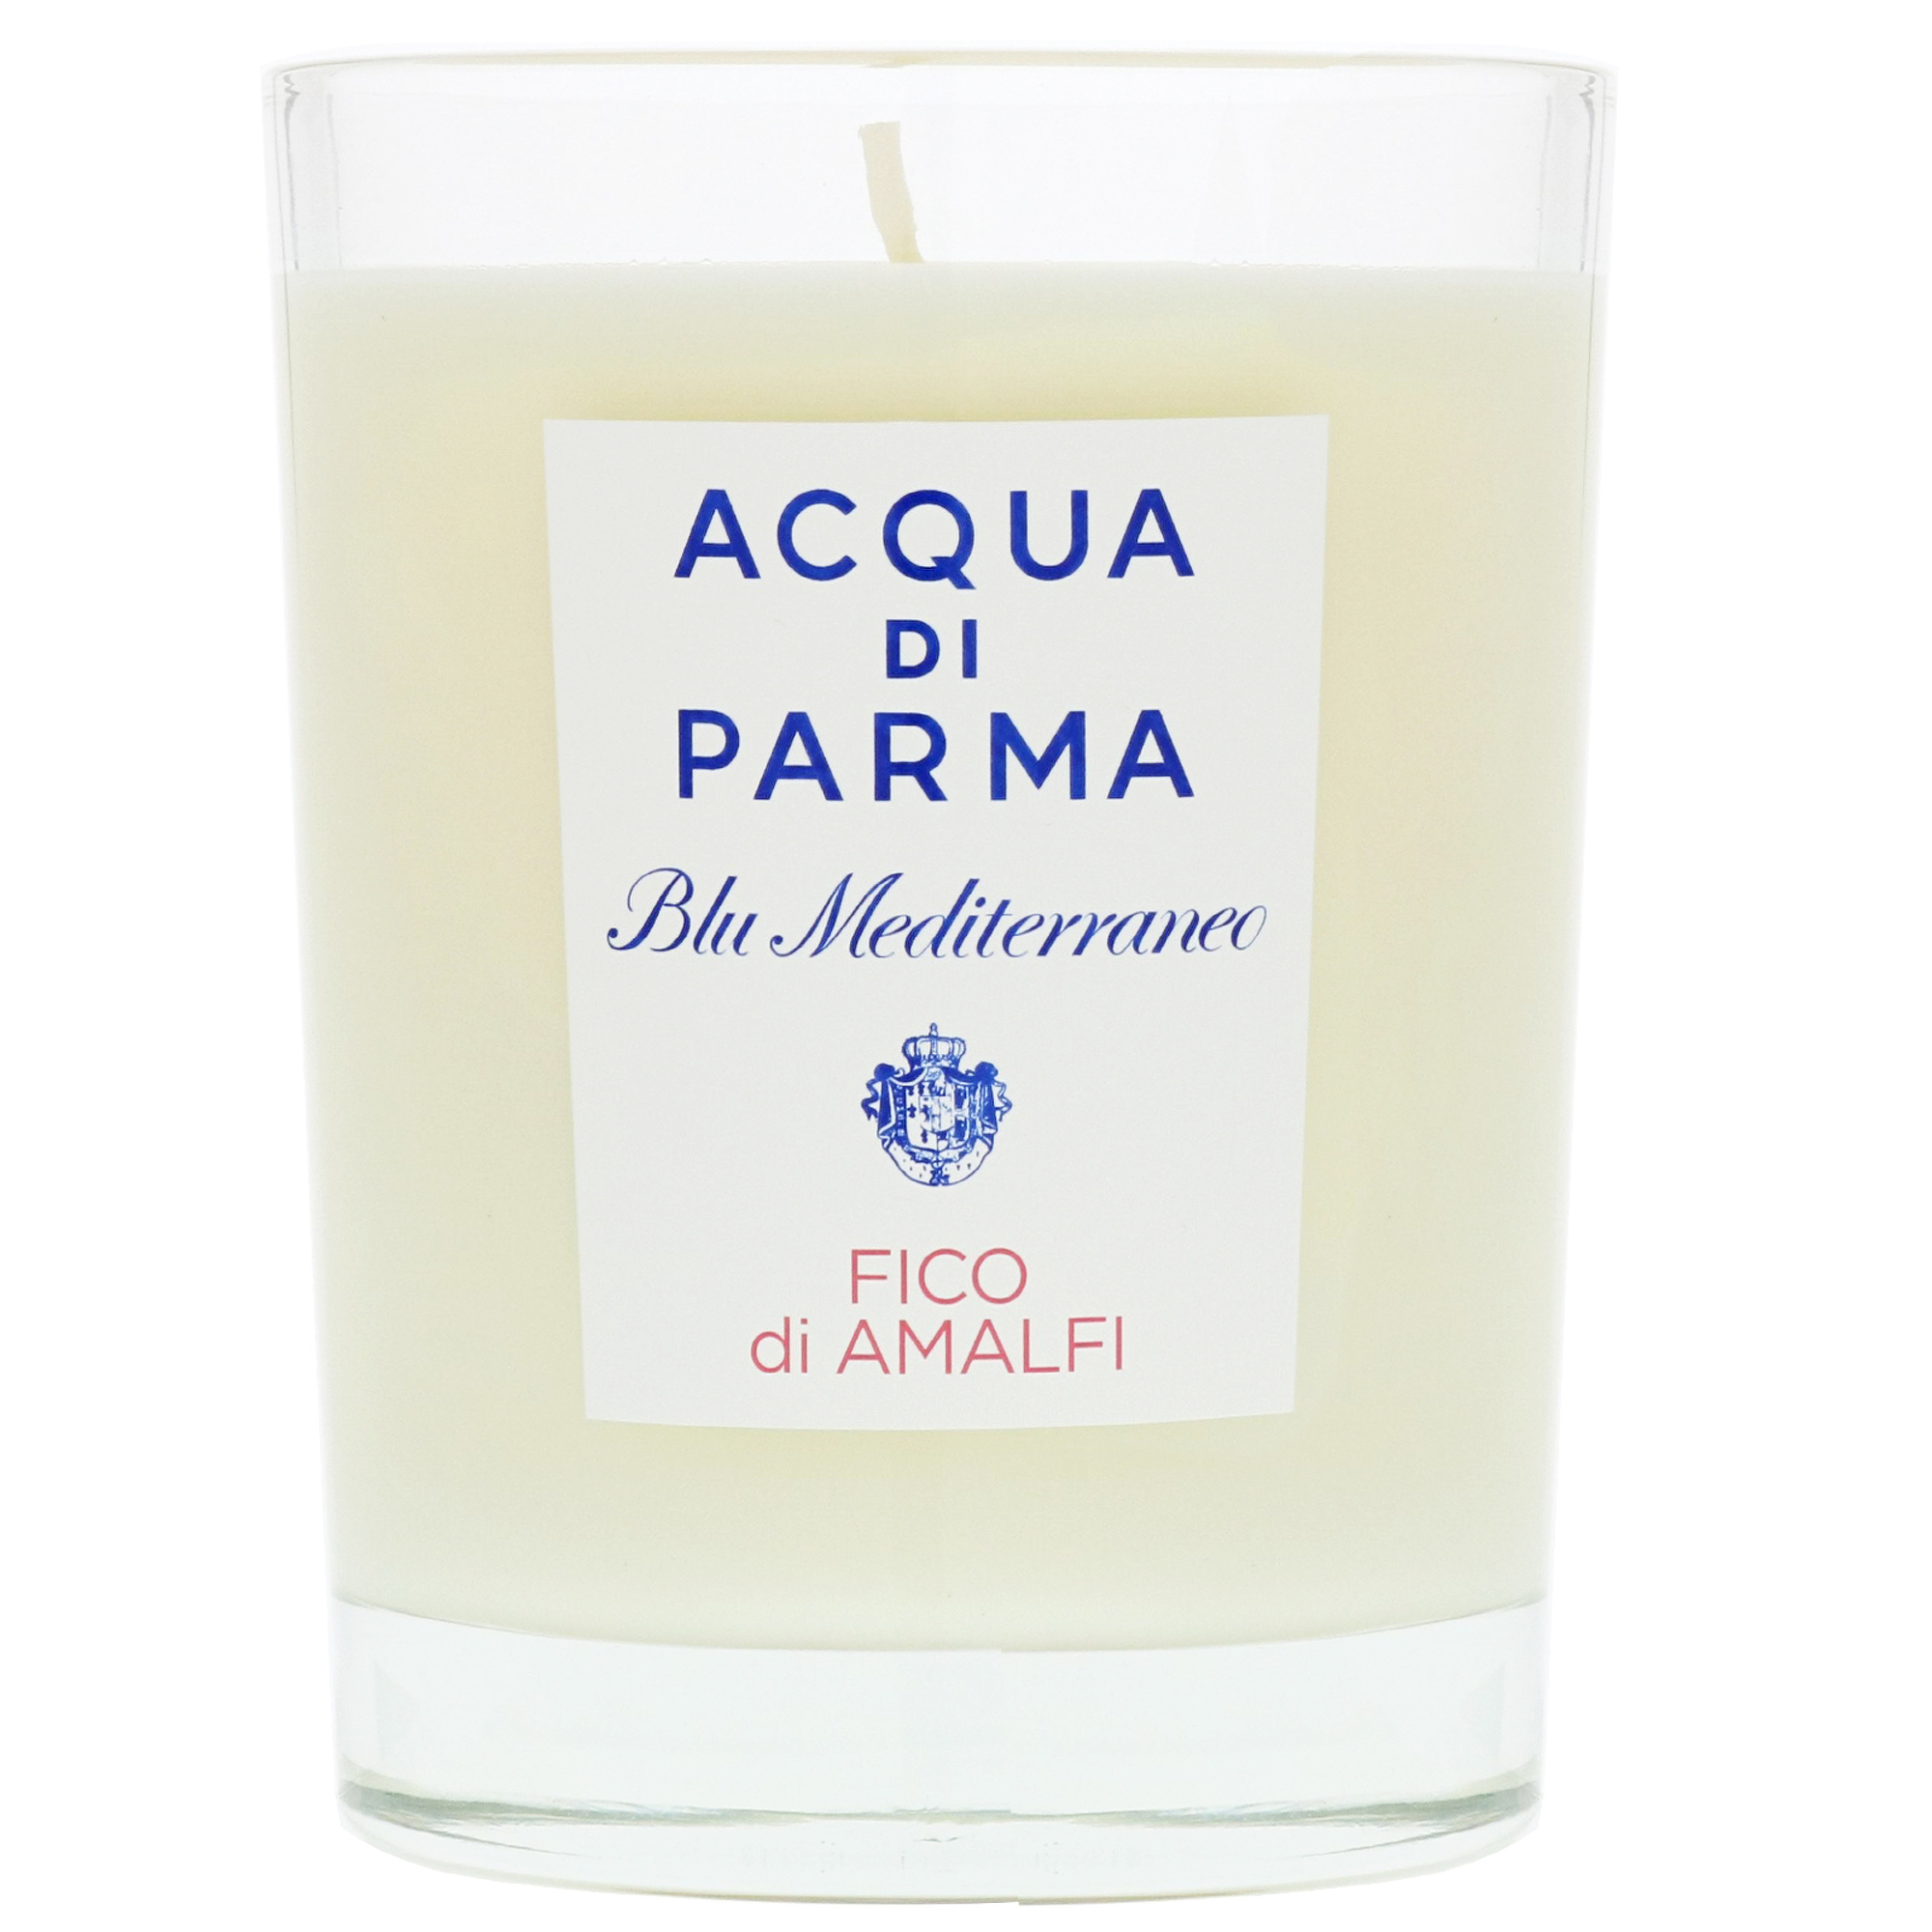 Photos - Women's Fragrance Acqua di Parma Home Fragrances Fico Di Amalfi Candle 200g 